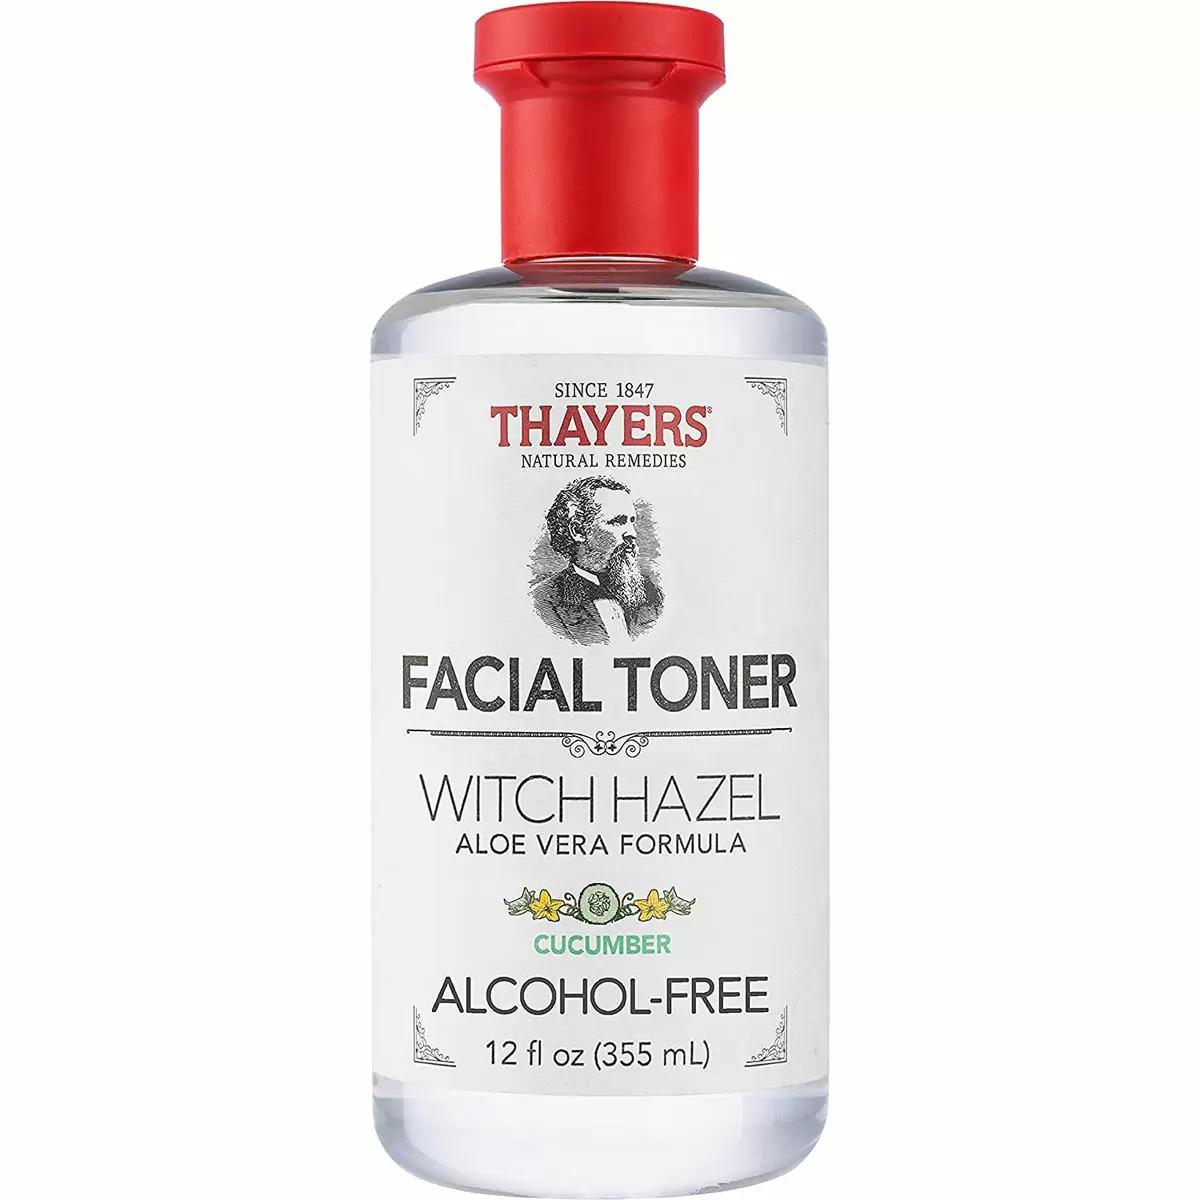 Thayers Witch Hazel Facial Toner with Aloe Vera for $5.75 Shipped